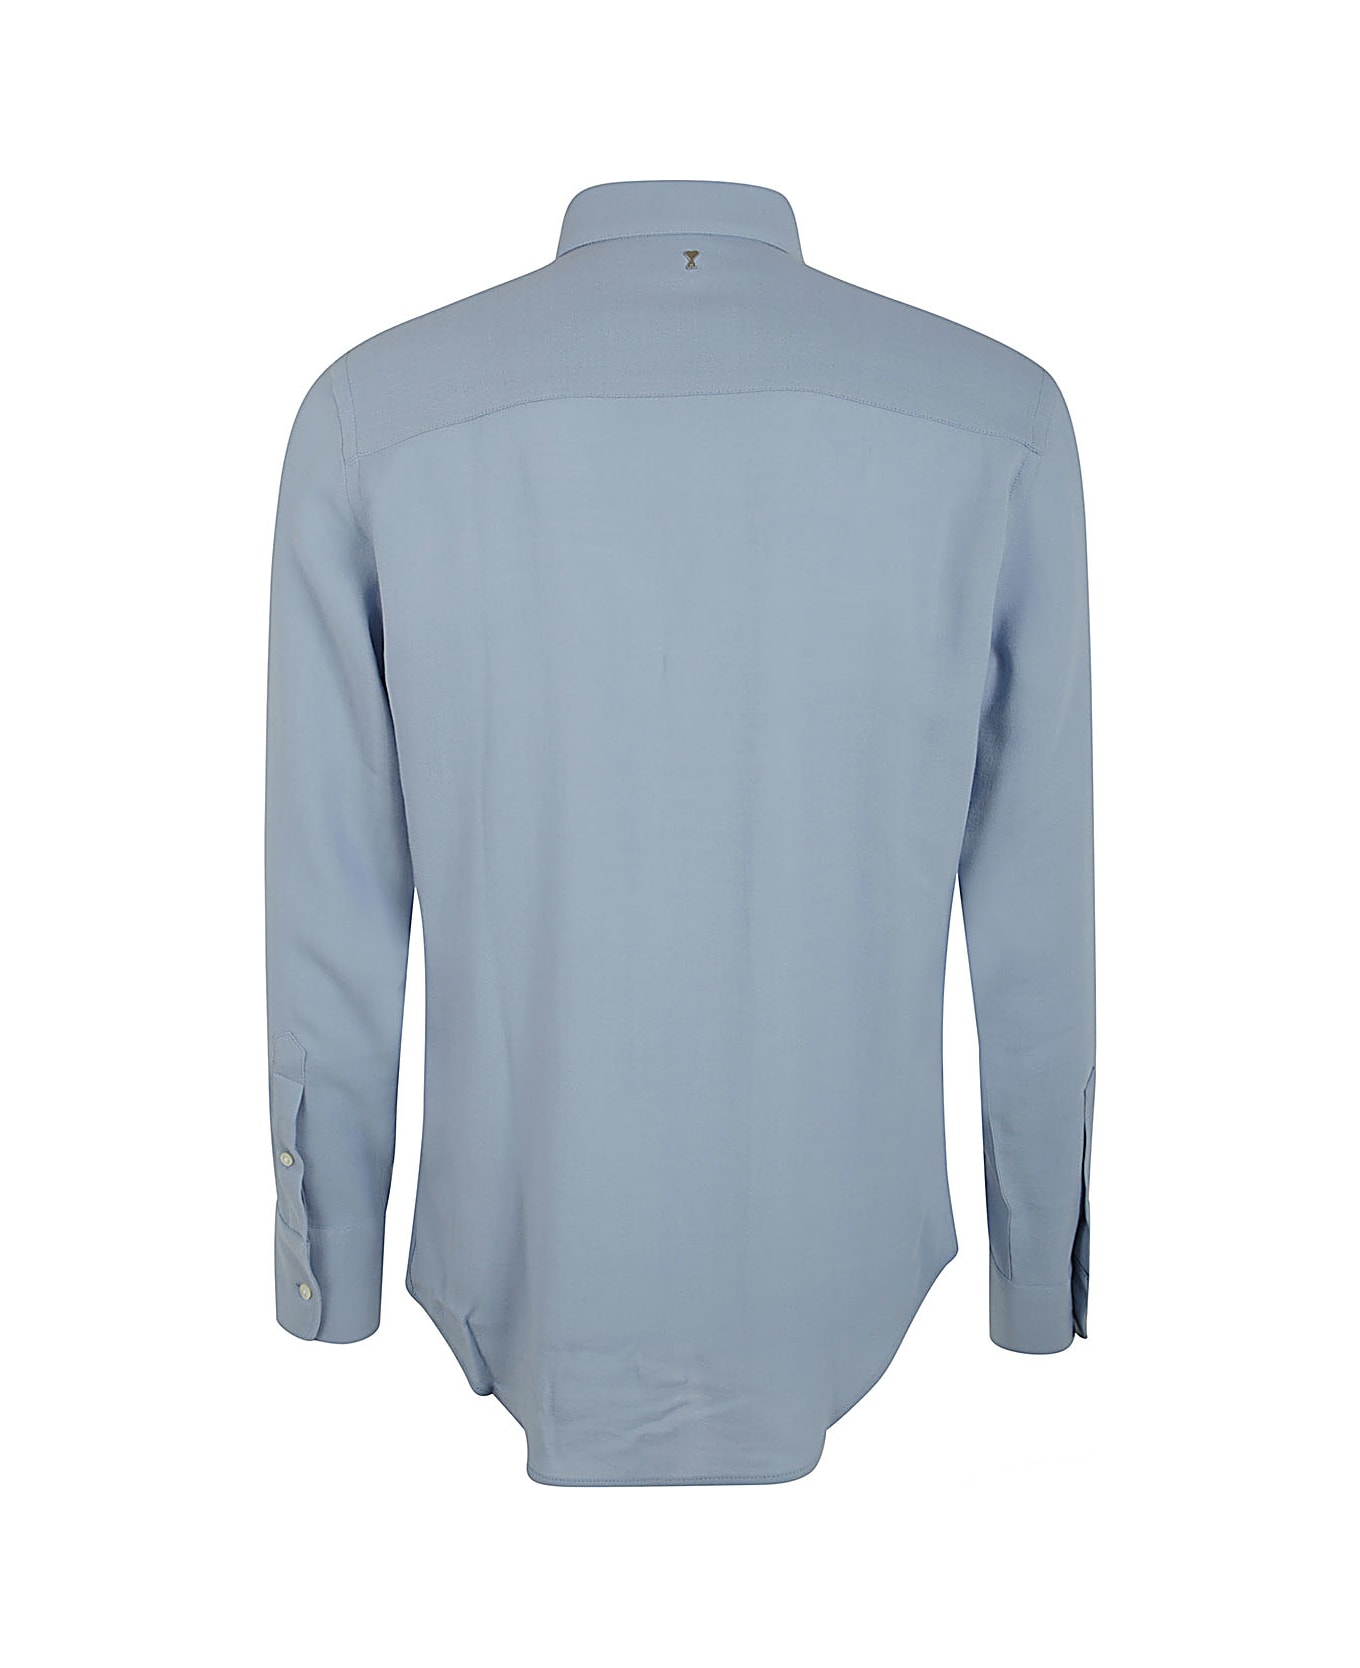 Ami Alexandre Mattiussi Classic Shirt - Cashmere Blue